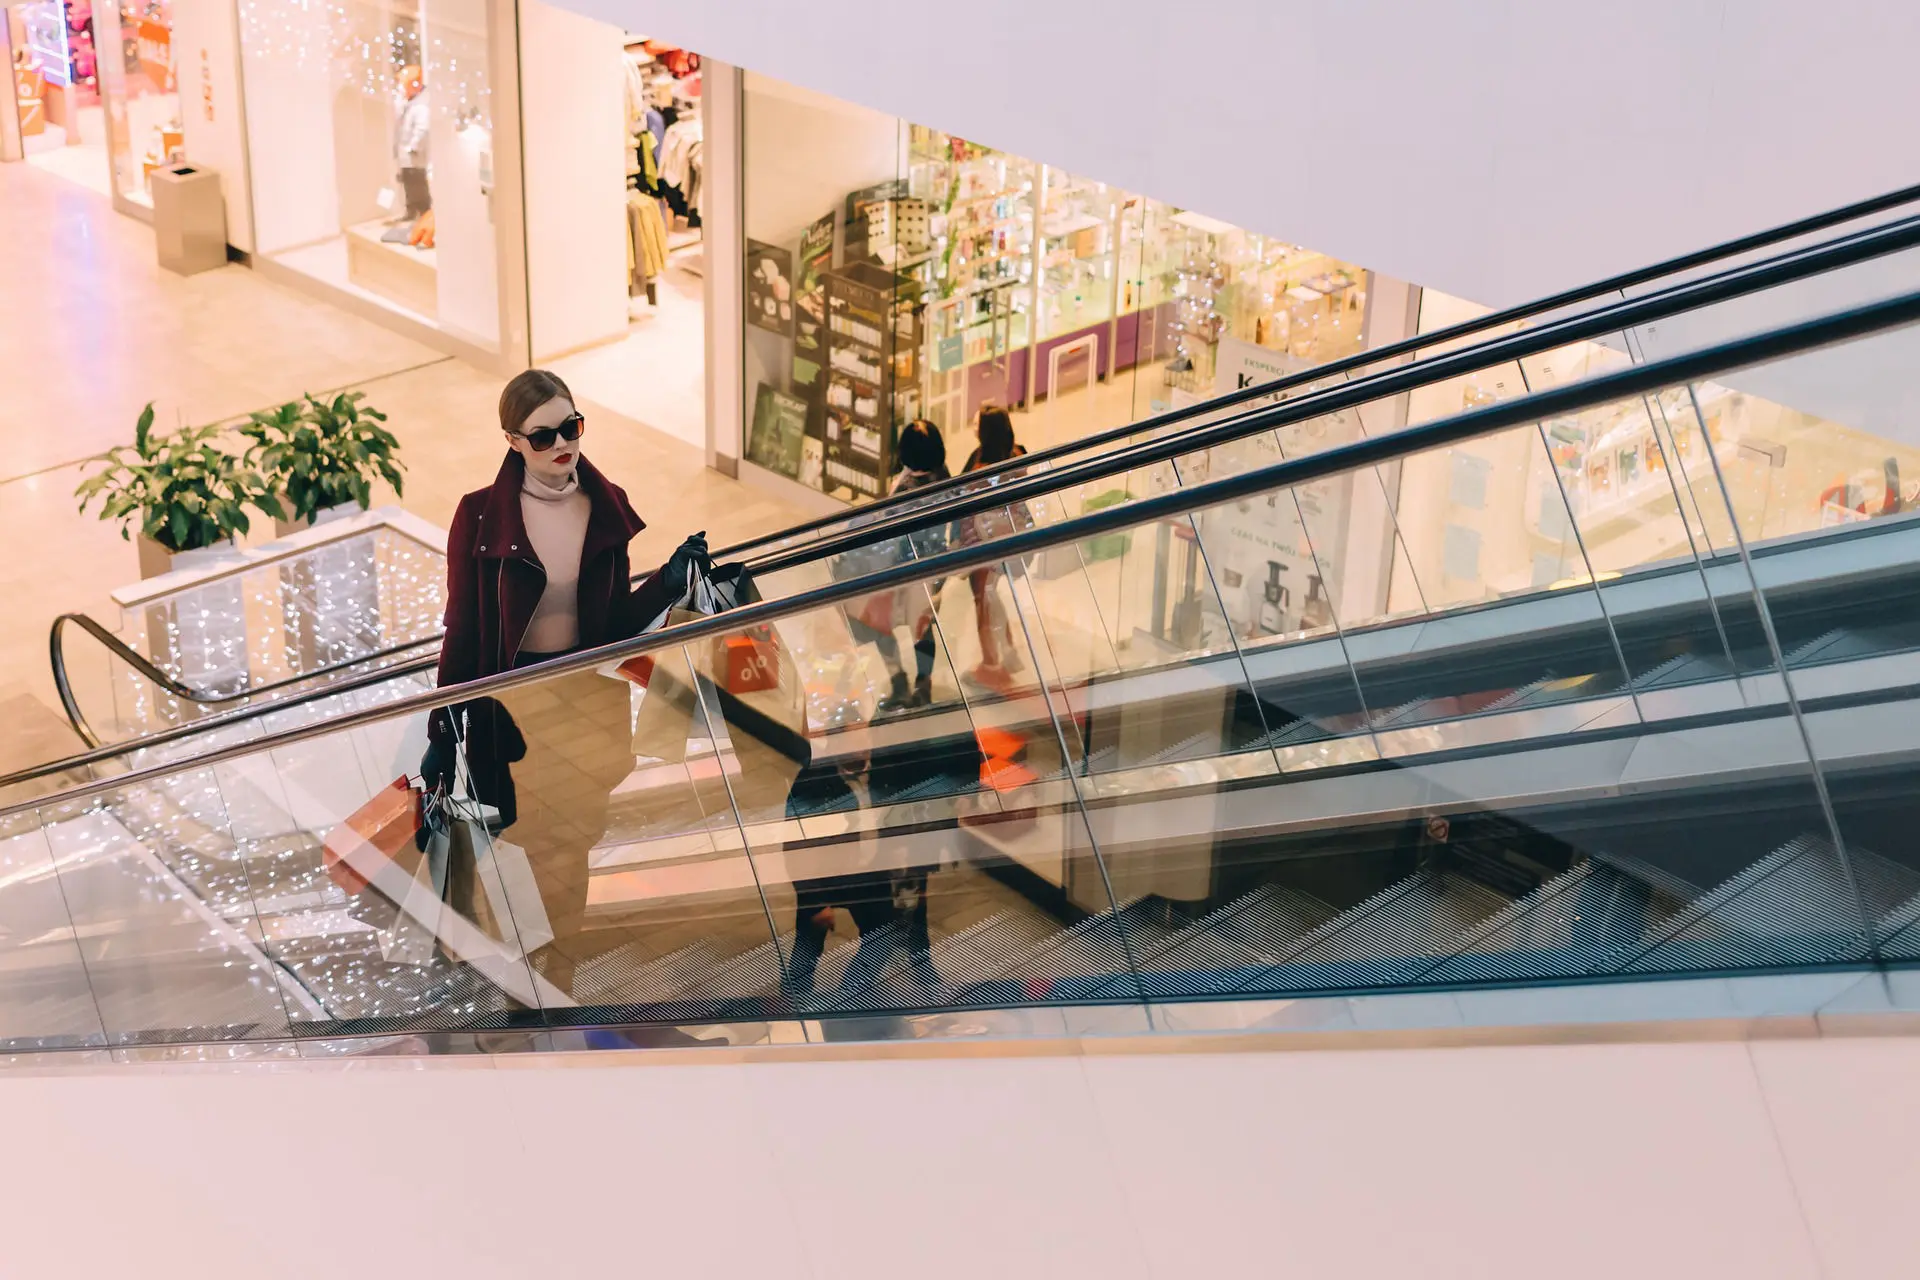 Lady riding escalator in shopping mall